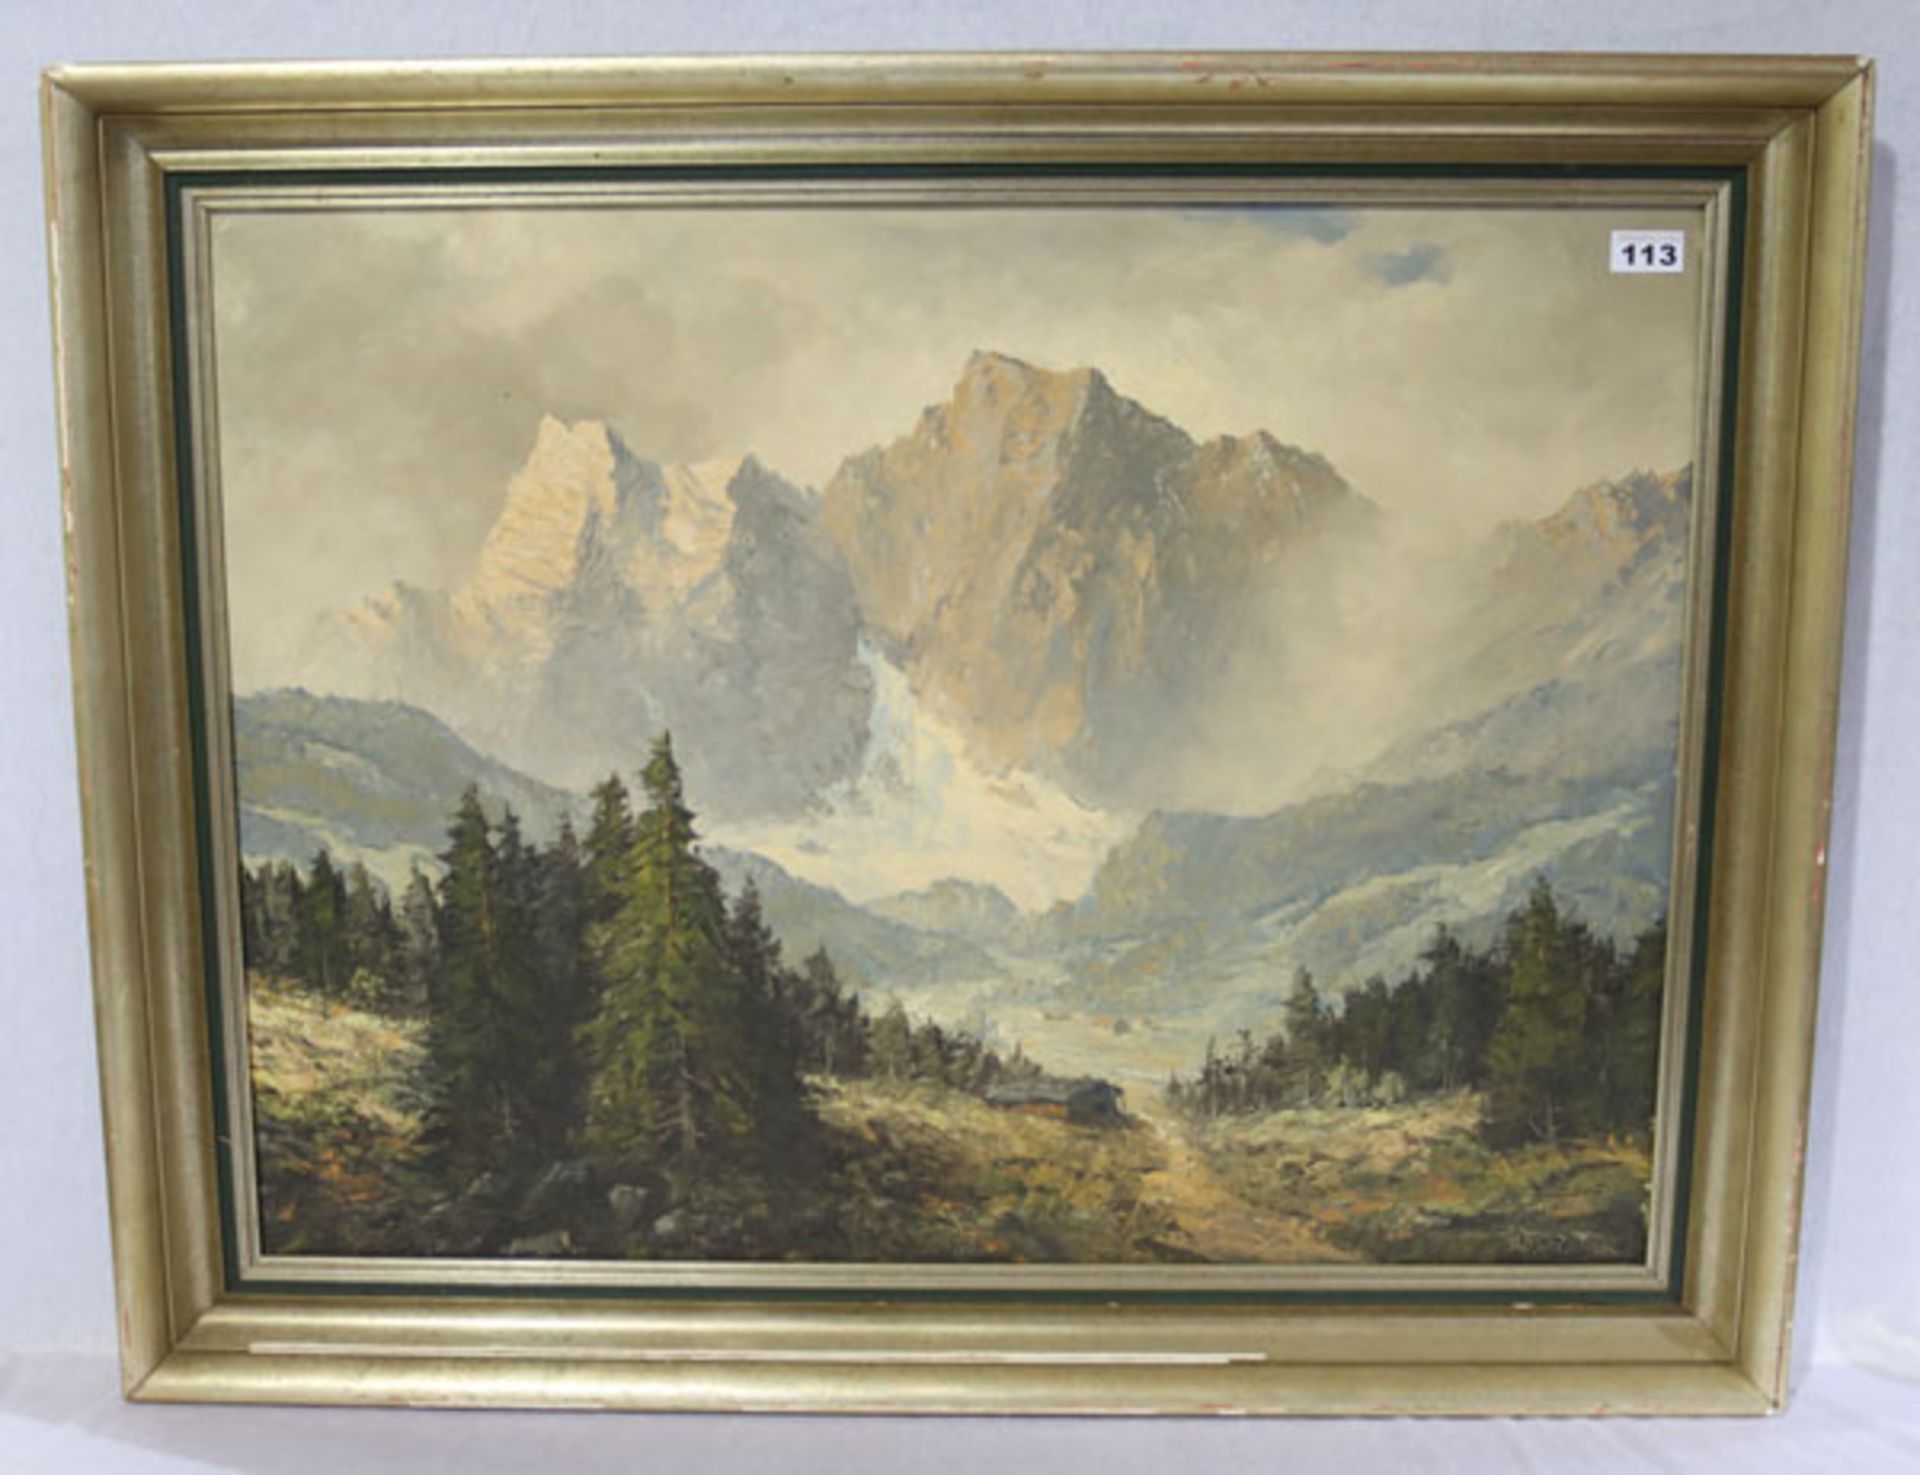 Gemälde ÖL/LW 'Hochgebirgs-Szenerie', signiert Ad. Wegener, Adolf, * 1891 + 1960, Landschafts-,